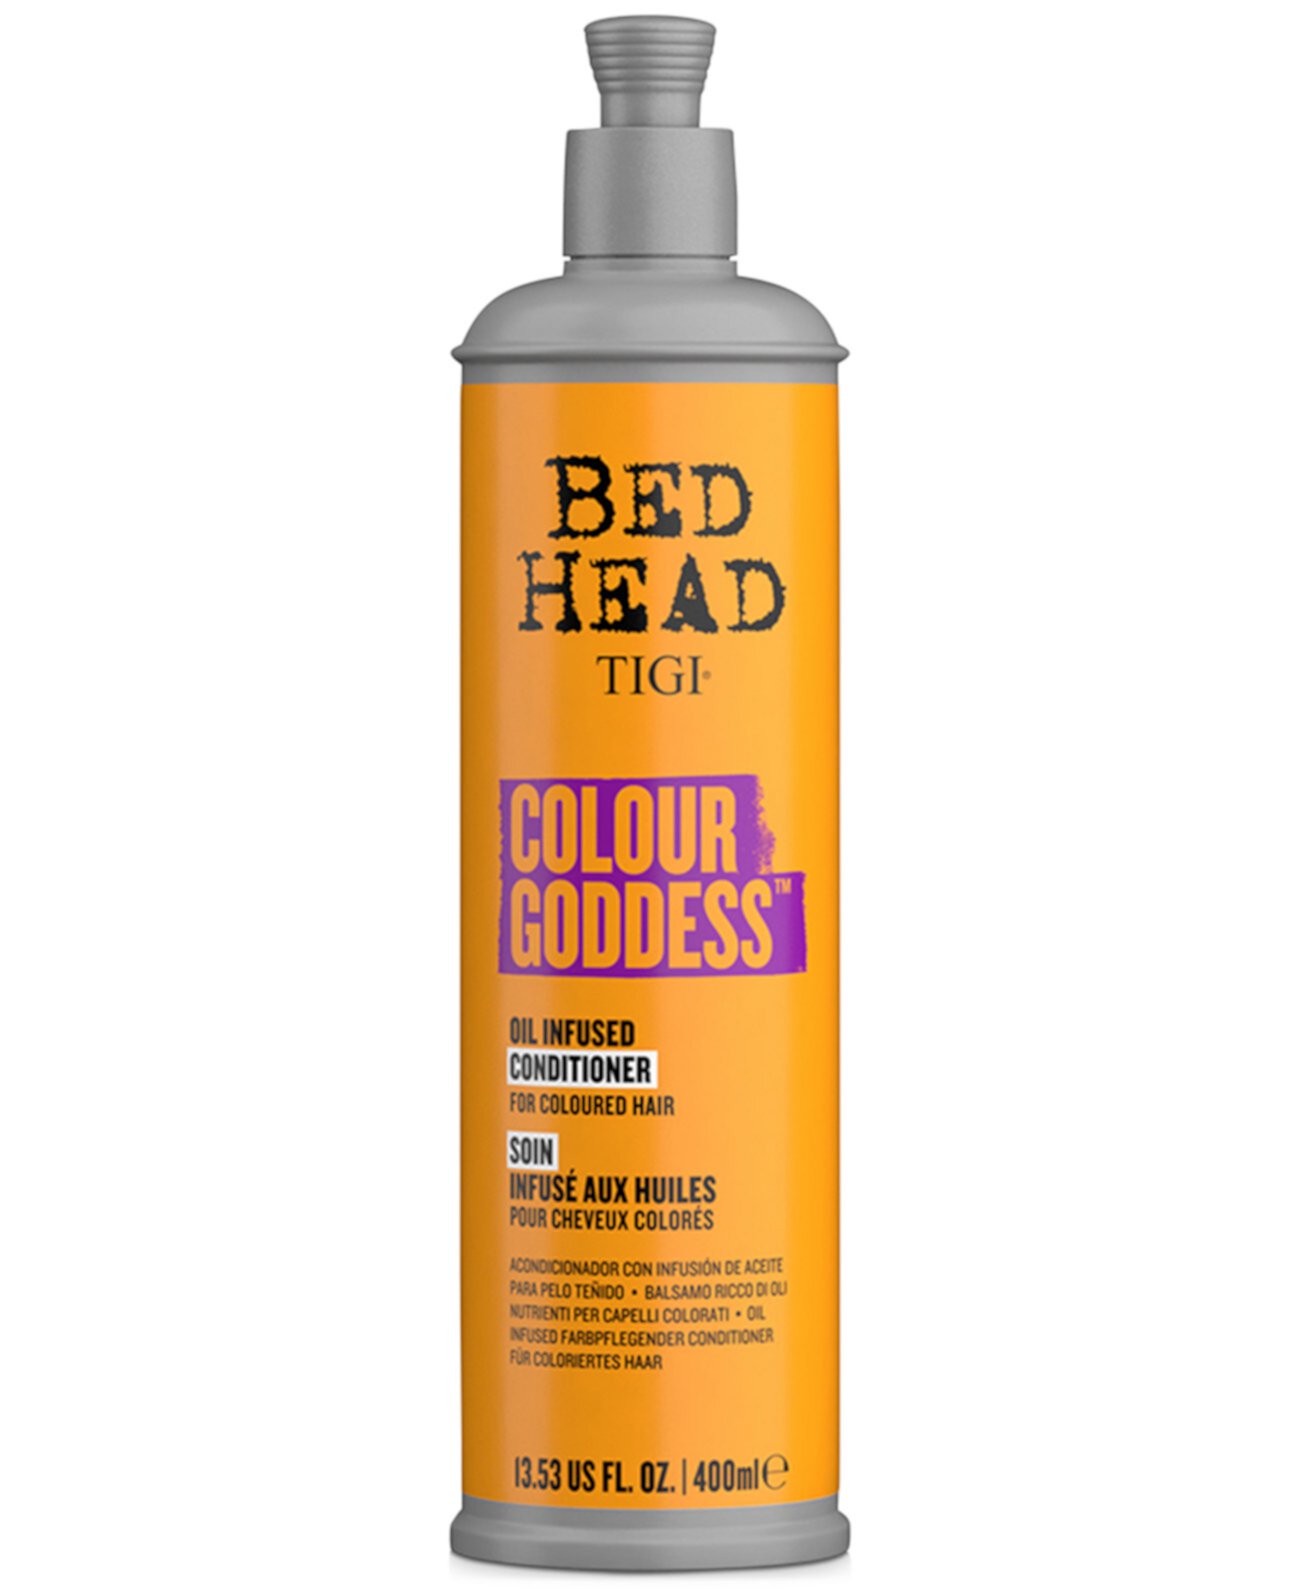 Кондиционер Bed Head Color Goddess, 13,53 унции, от PUREBEAUTY Salon & Spa TIGI